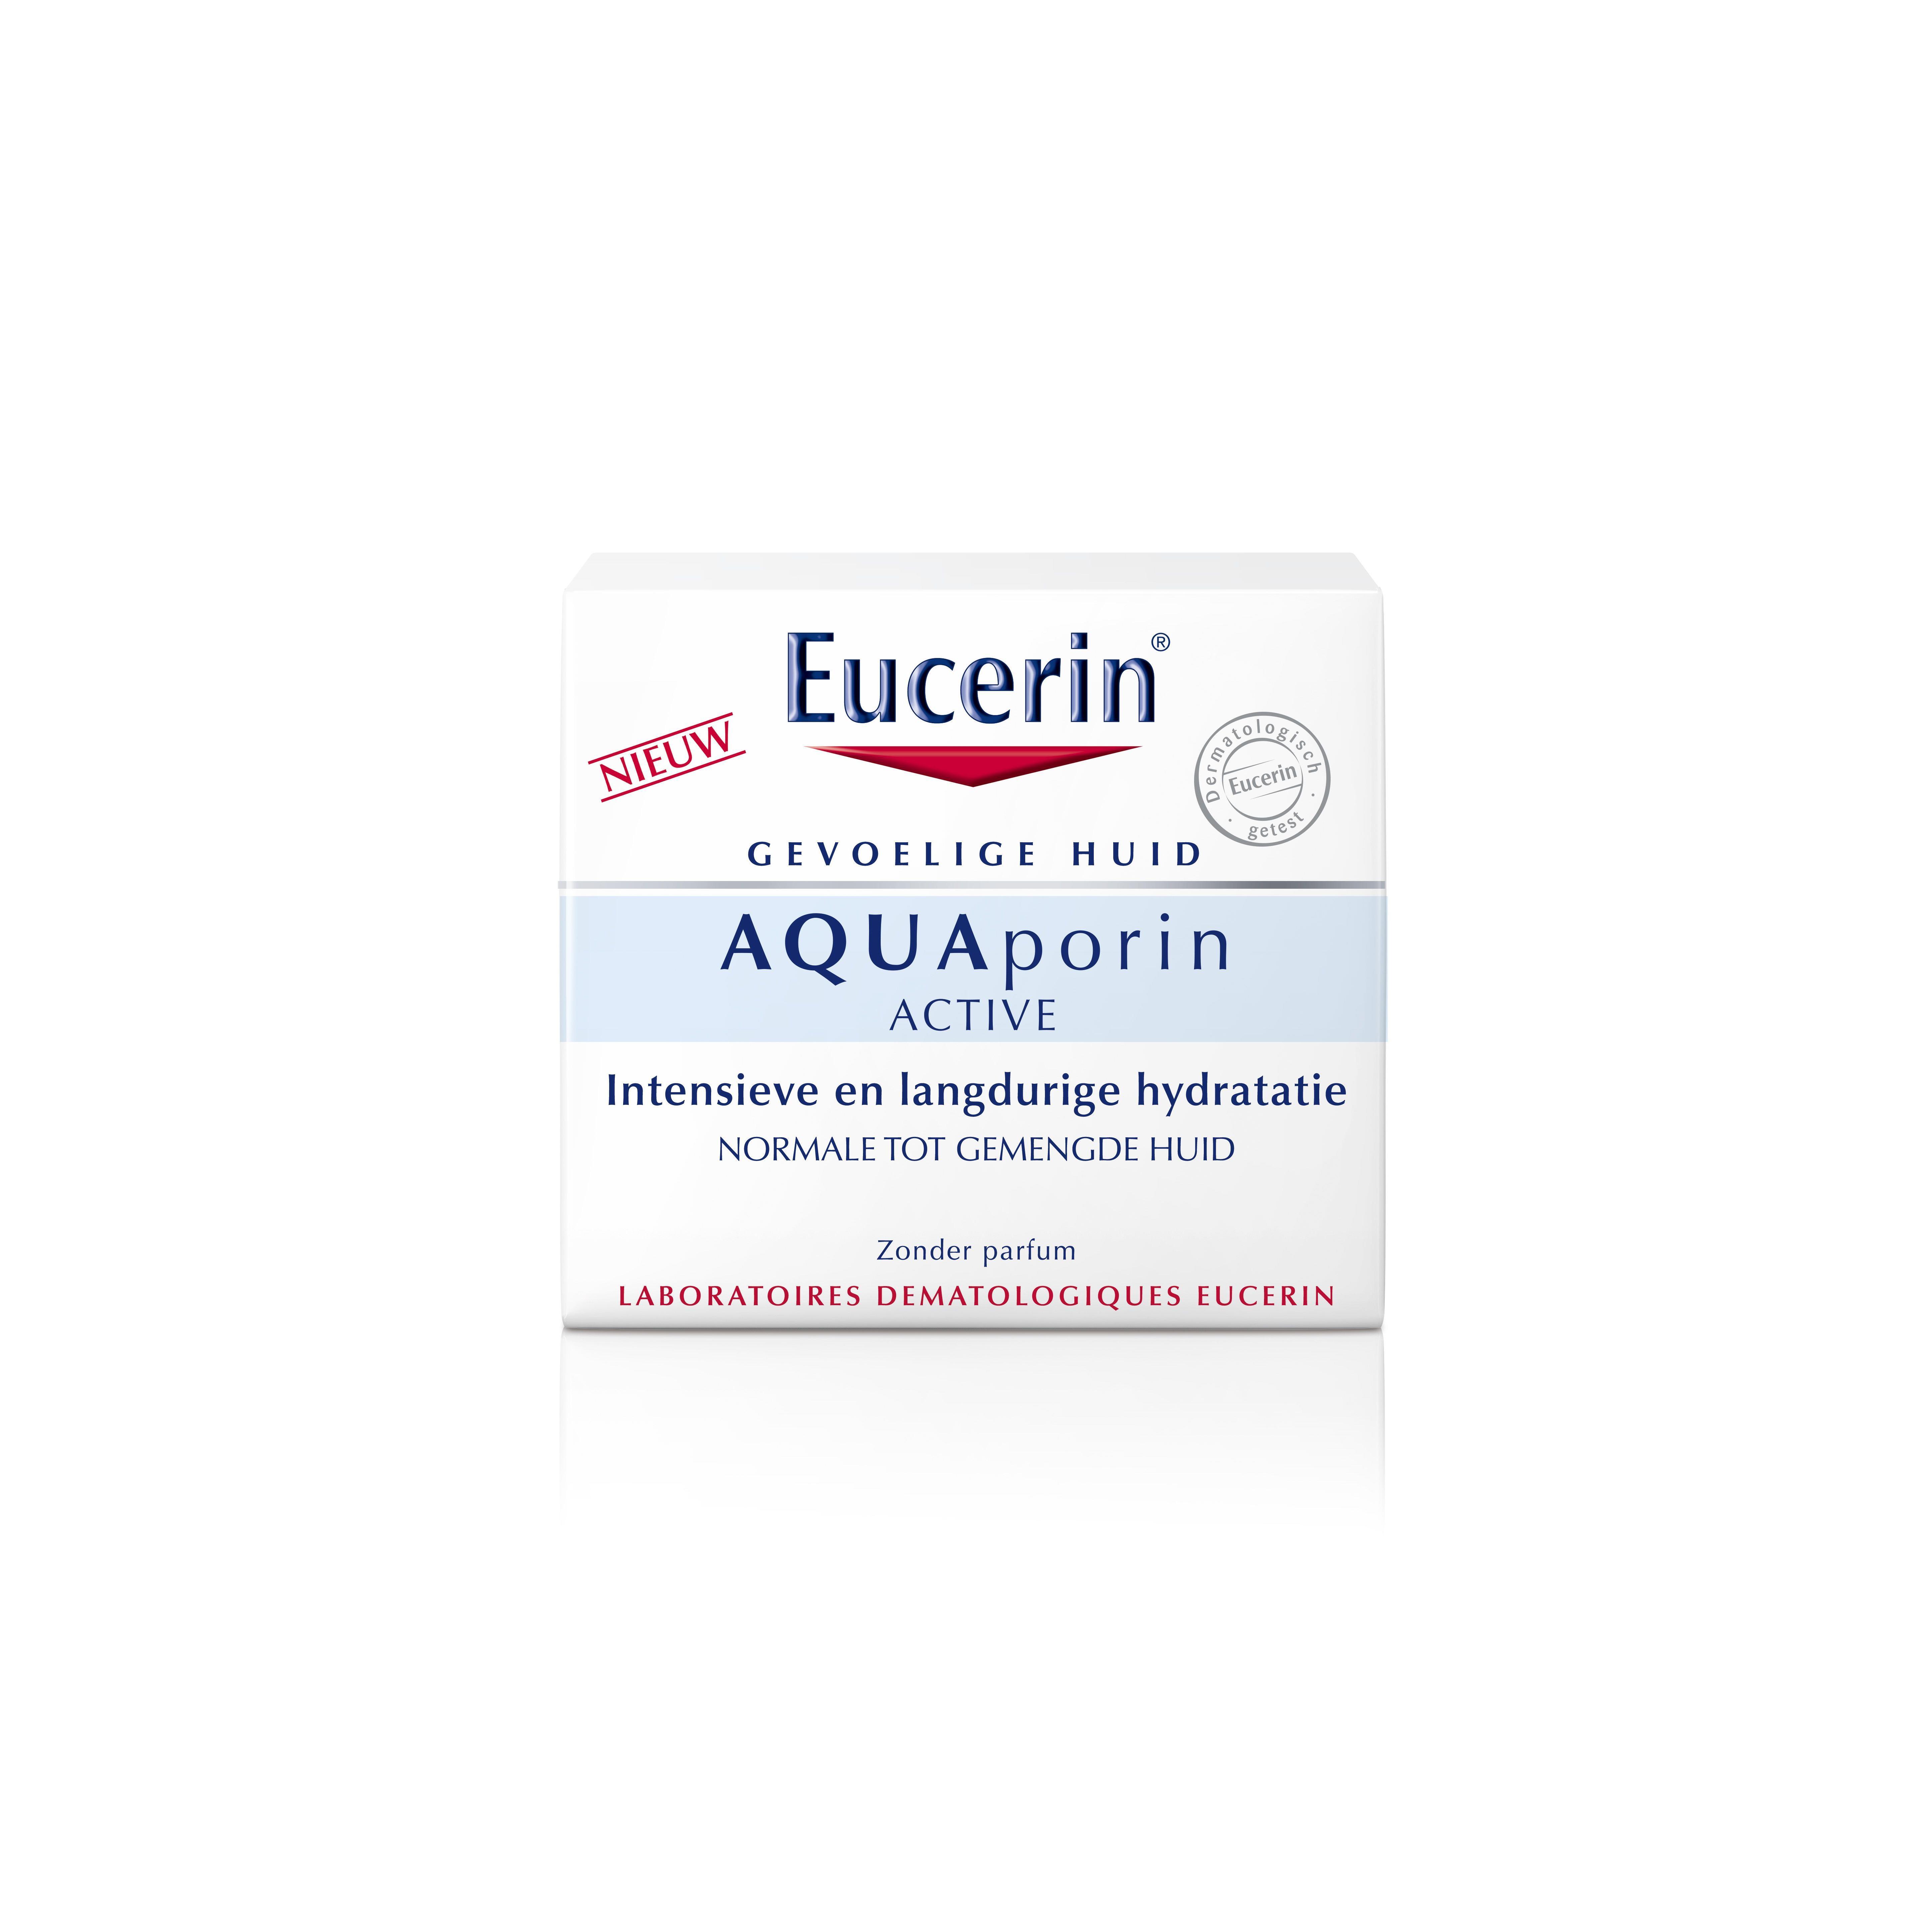 Eucerin Aquaporin active hydraterende crème NH/GH Crème 50ml